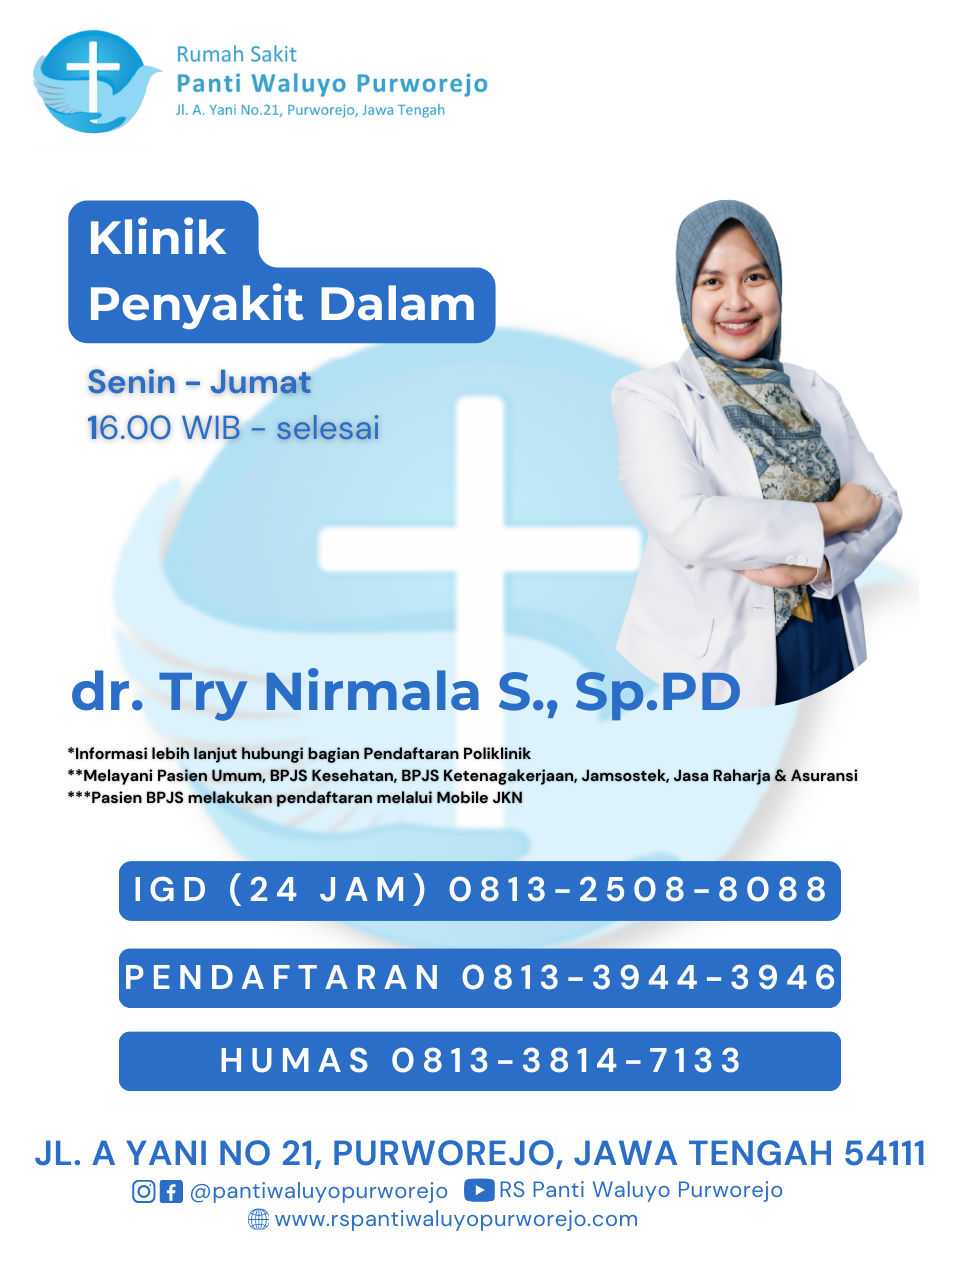 dr. Try Nirmala Sari, Sp.PD